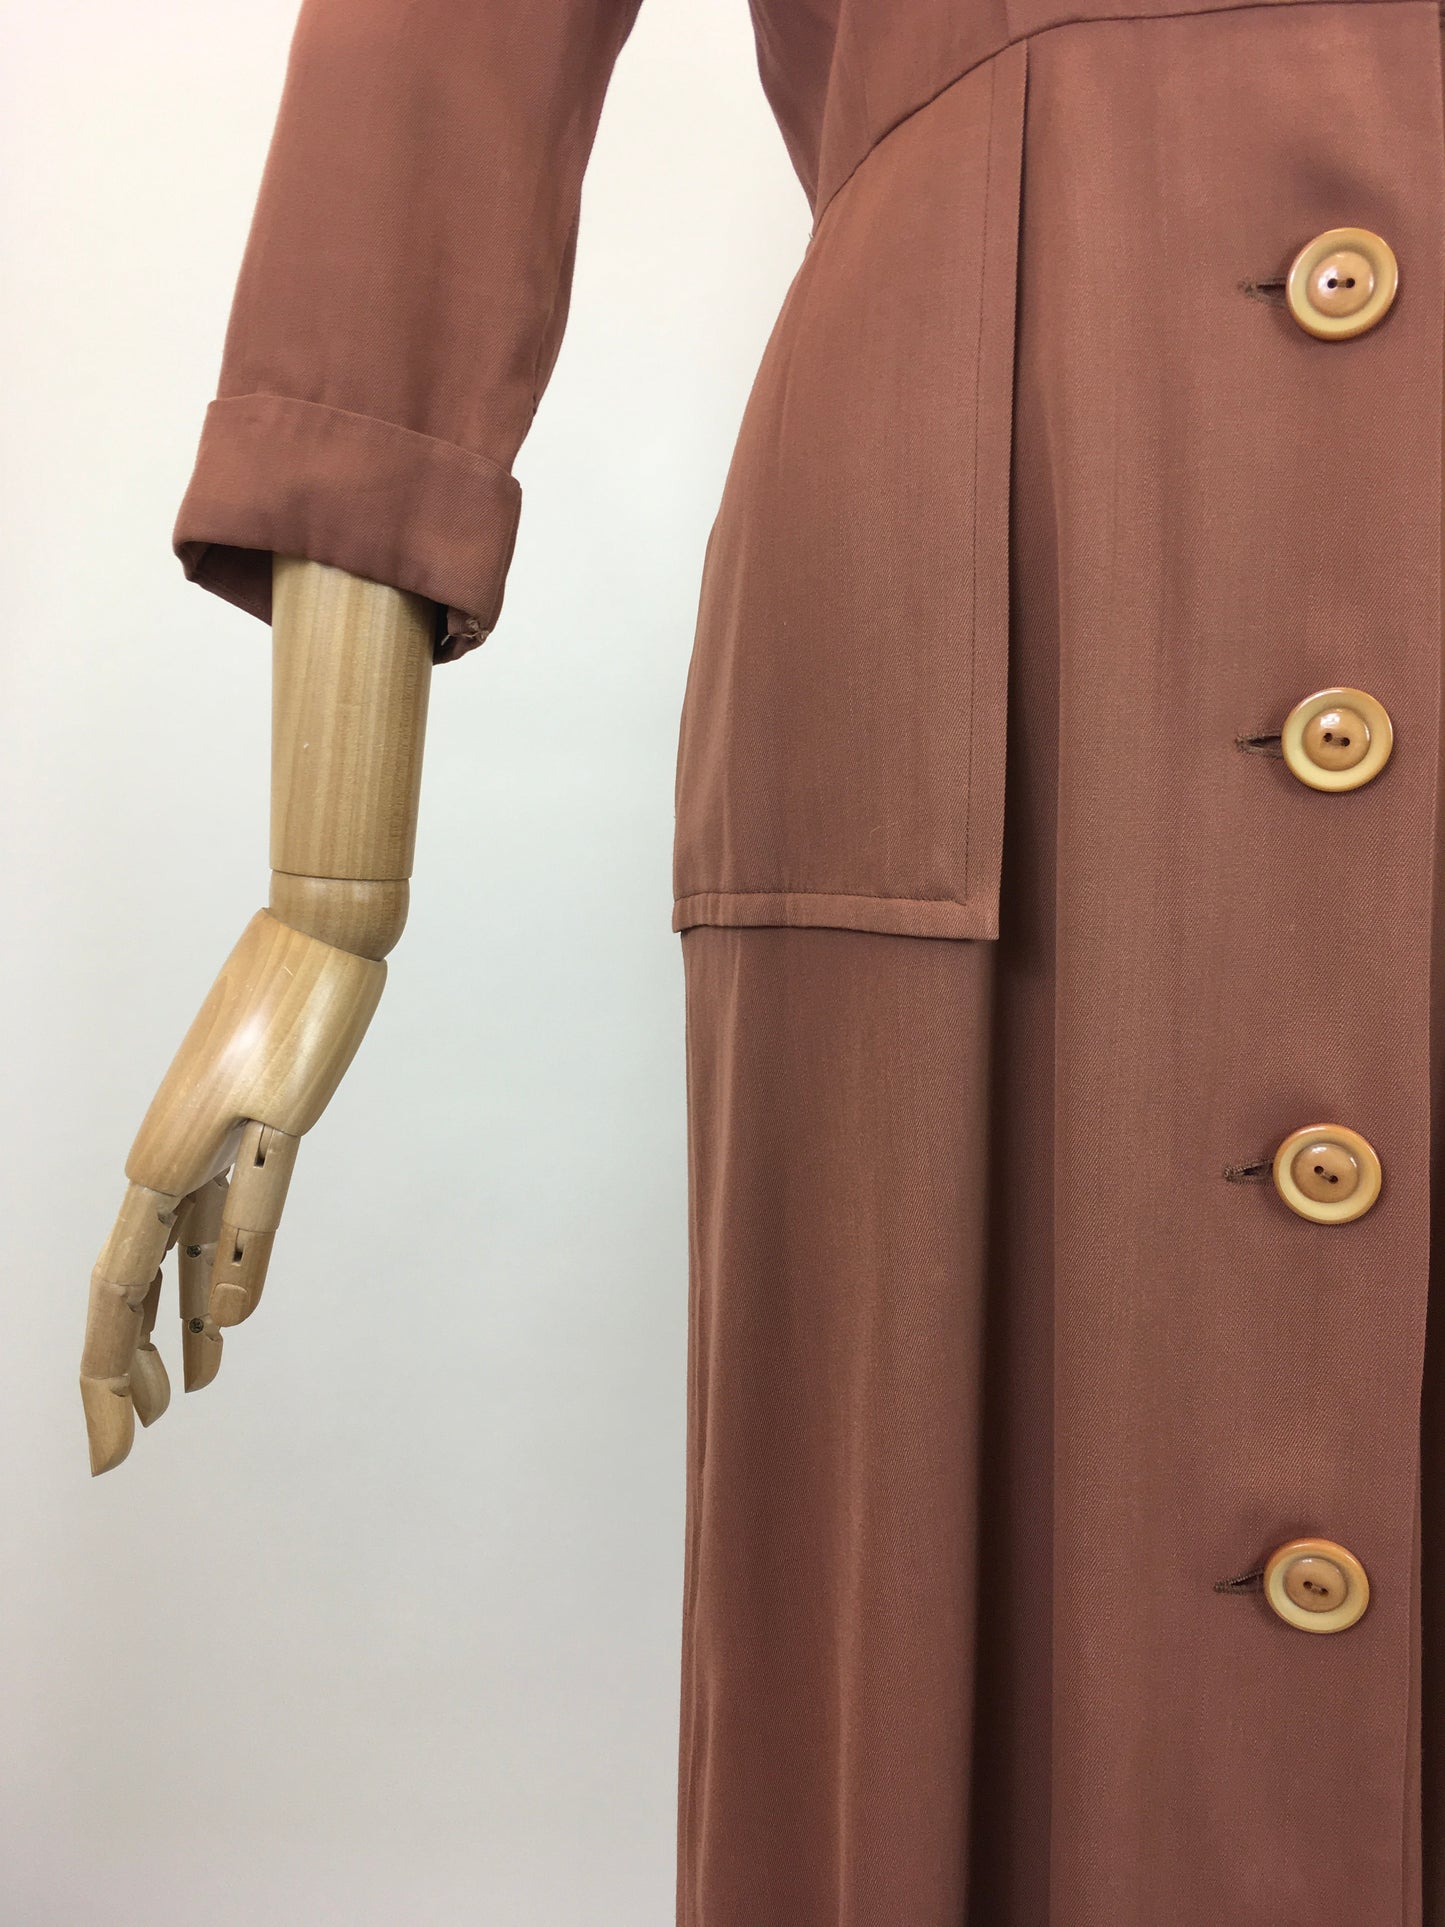 Original 1940's Darling Gaberdine Dress - In A Soft Chestnut Brown